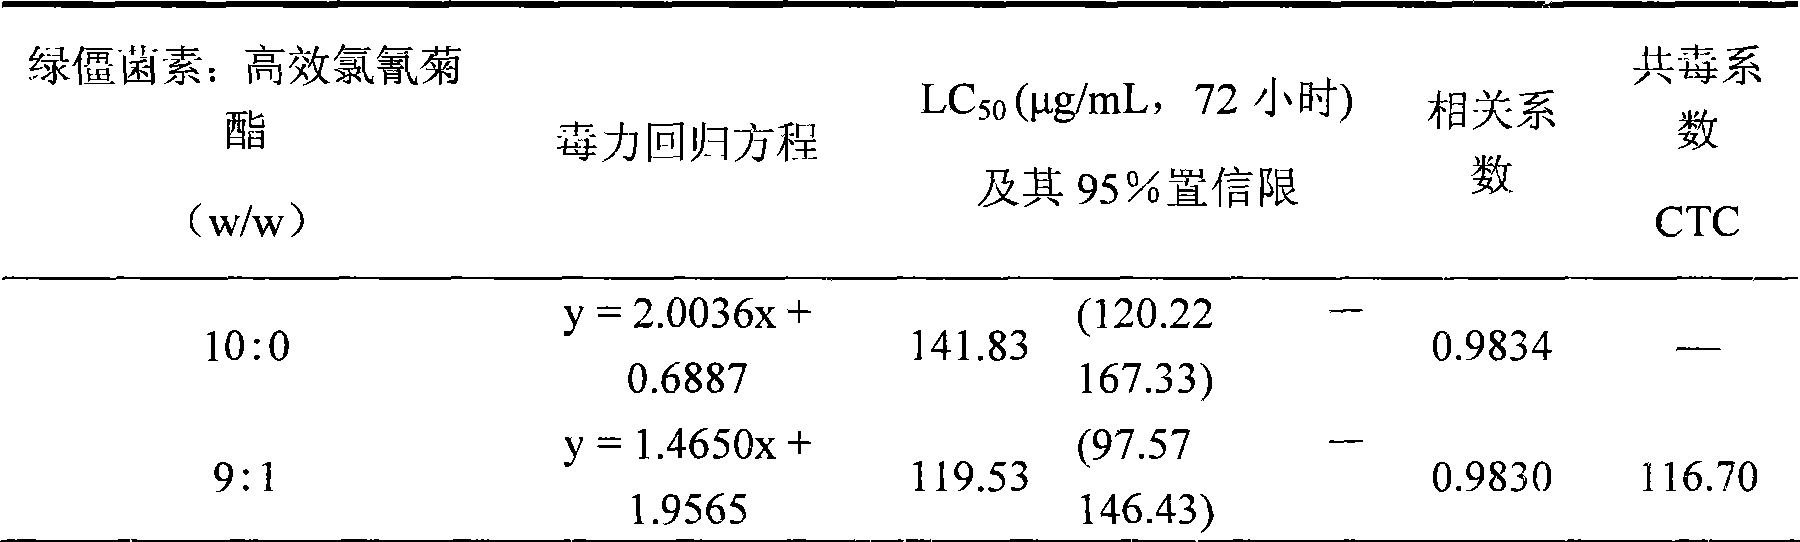 Compositional main pesticide and pesticide containing destruxins of Metarhizium anisopliae and high-efficient cypermethrin